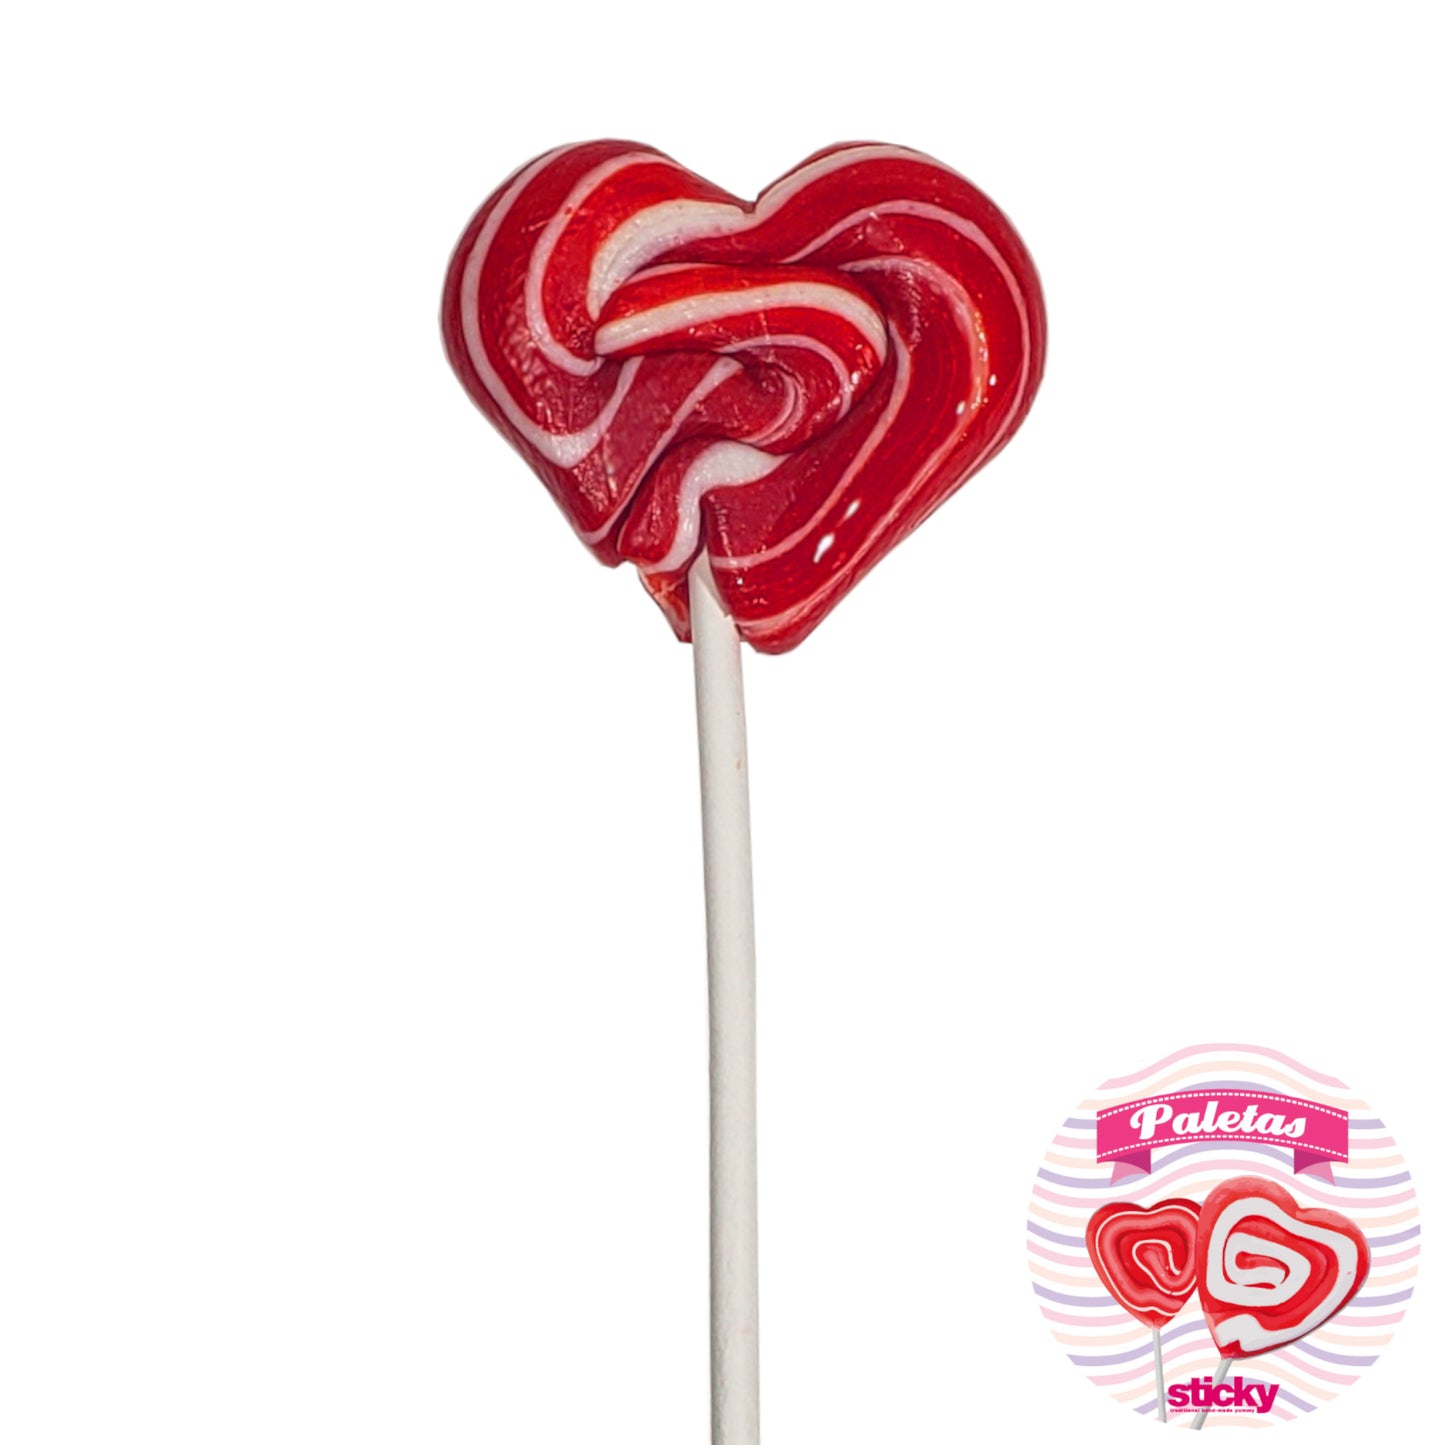 Chewing gum heart lollipop with cherry 20g / heart lollipop